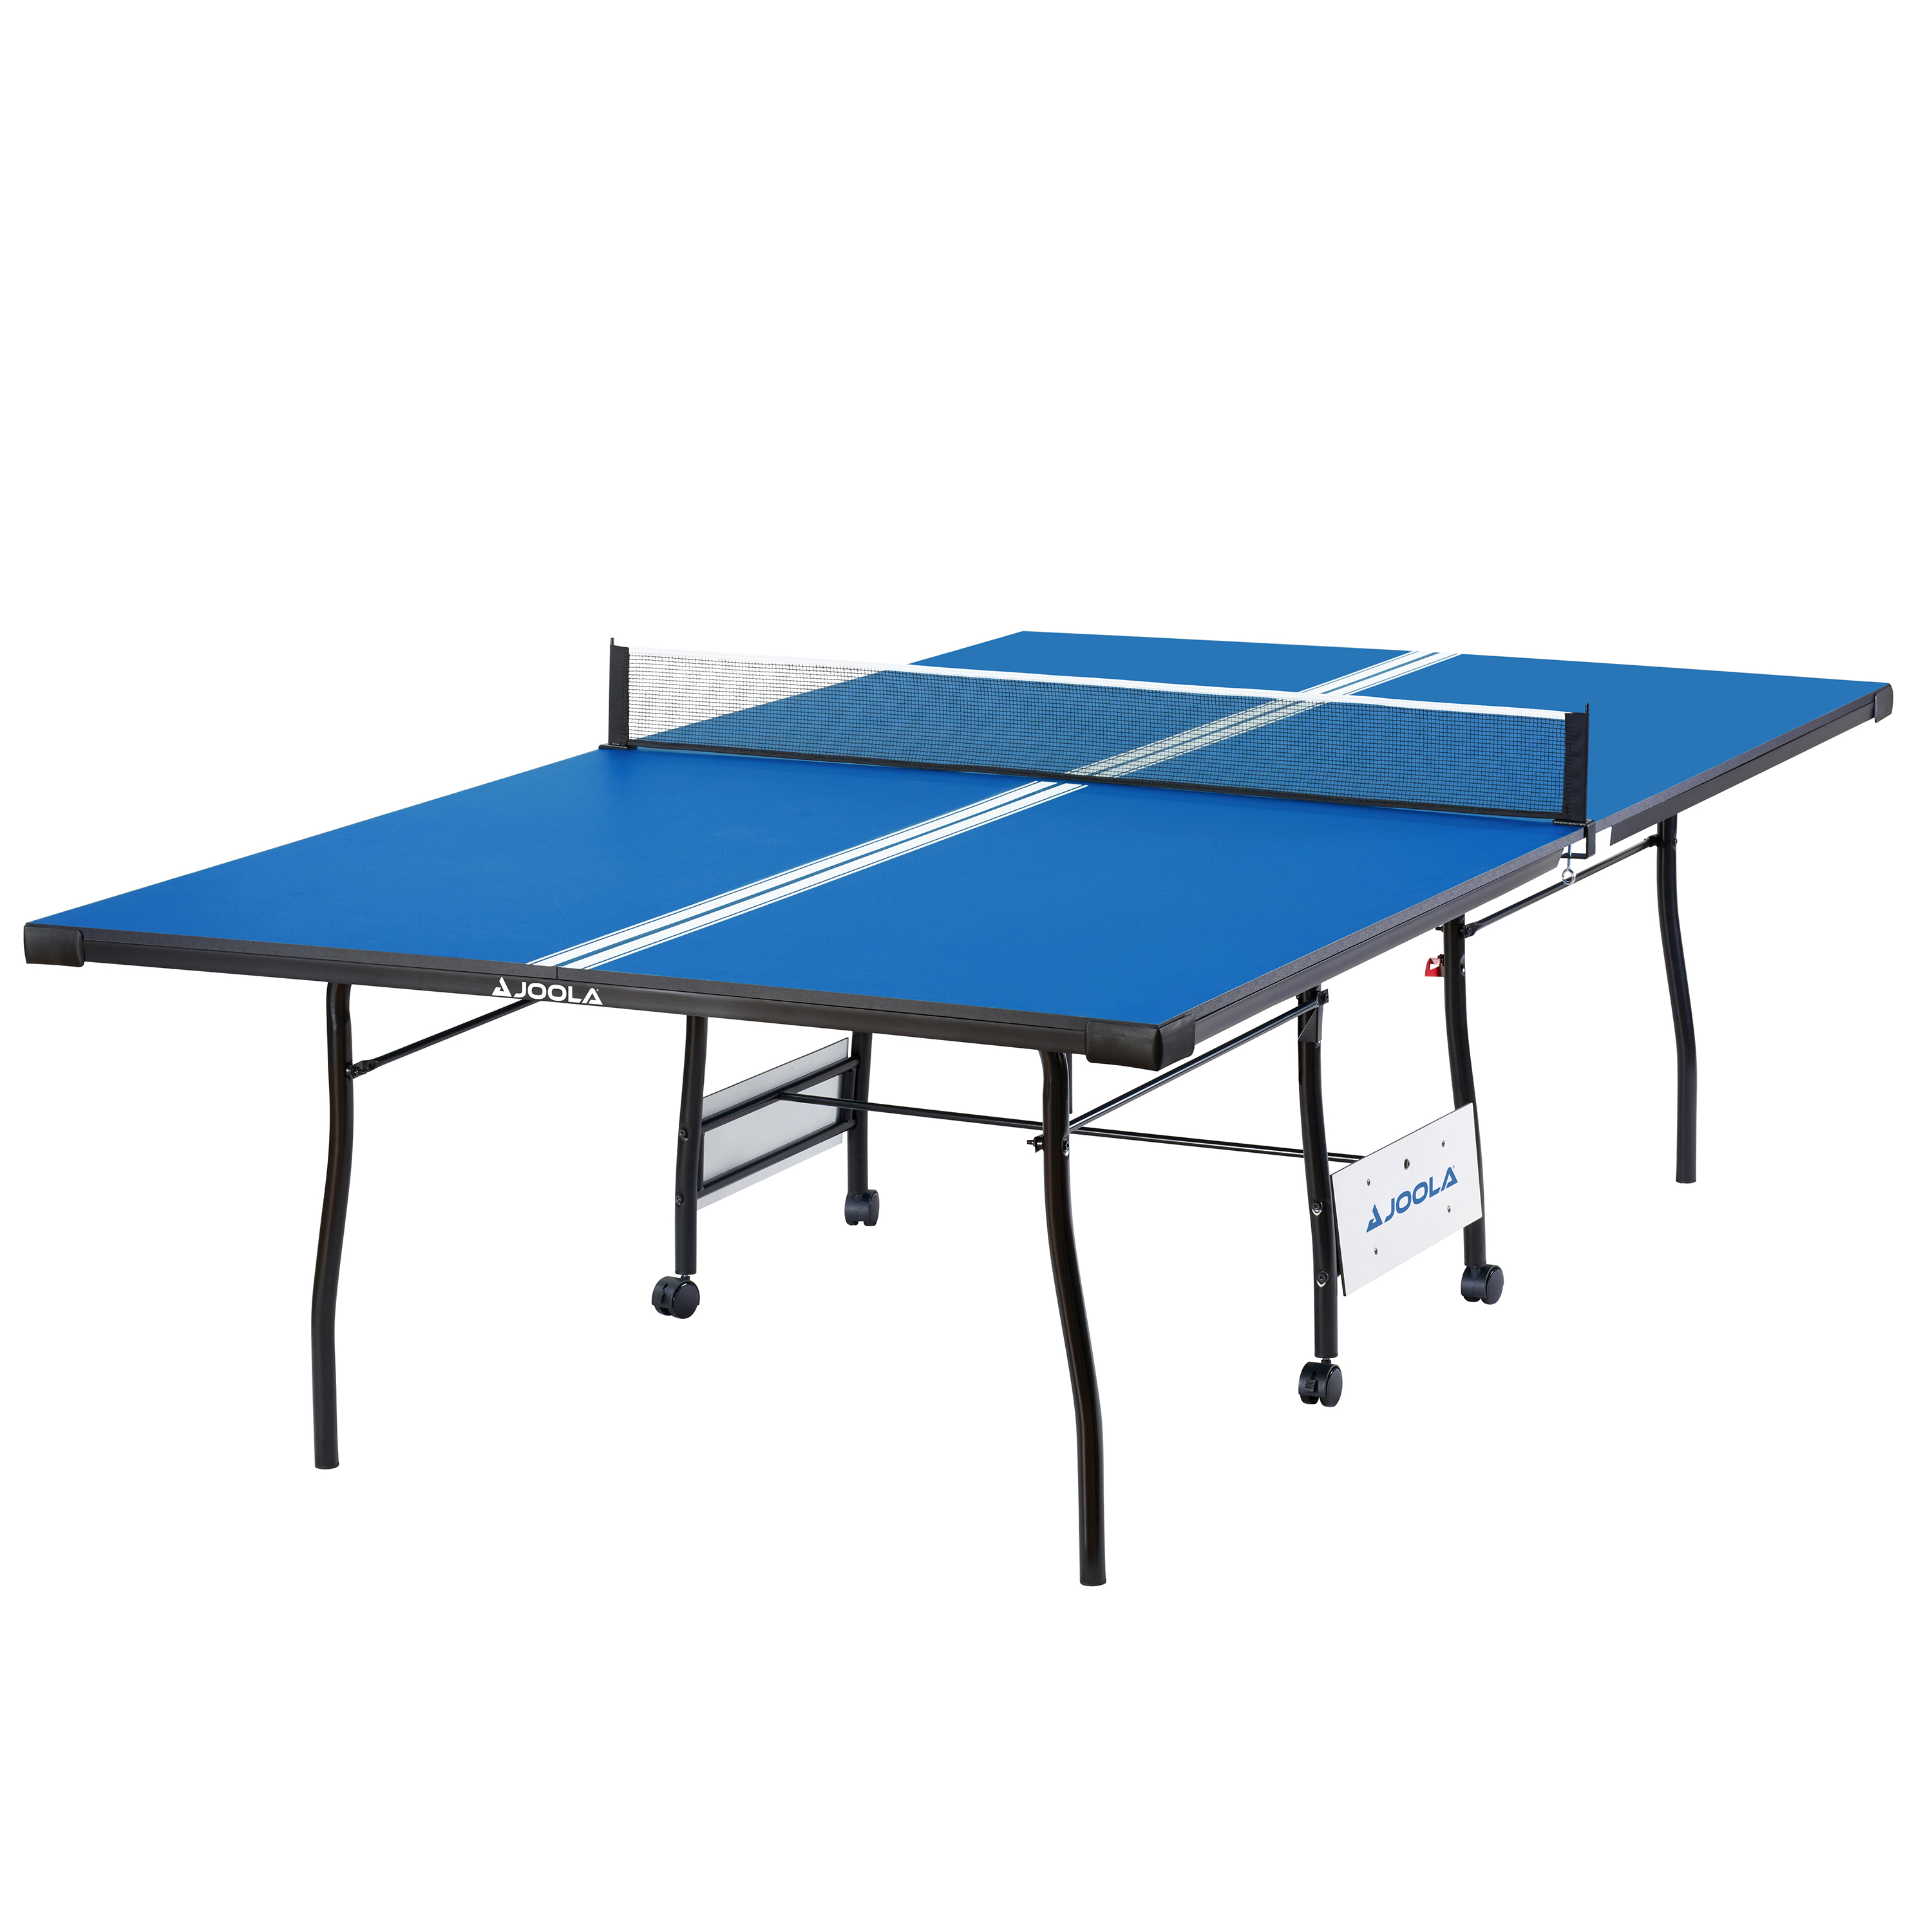 low end JOOLA Table Tennis Table $92 at walmart. $92.00